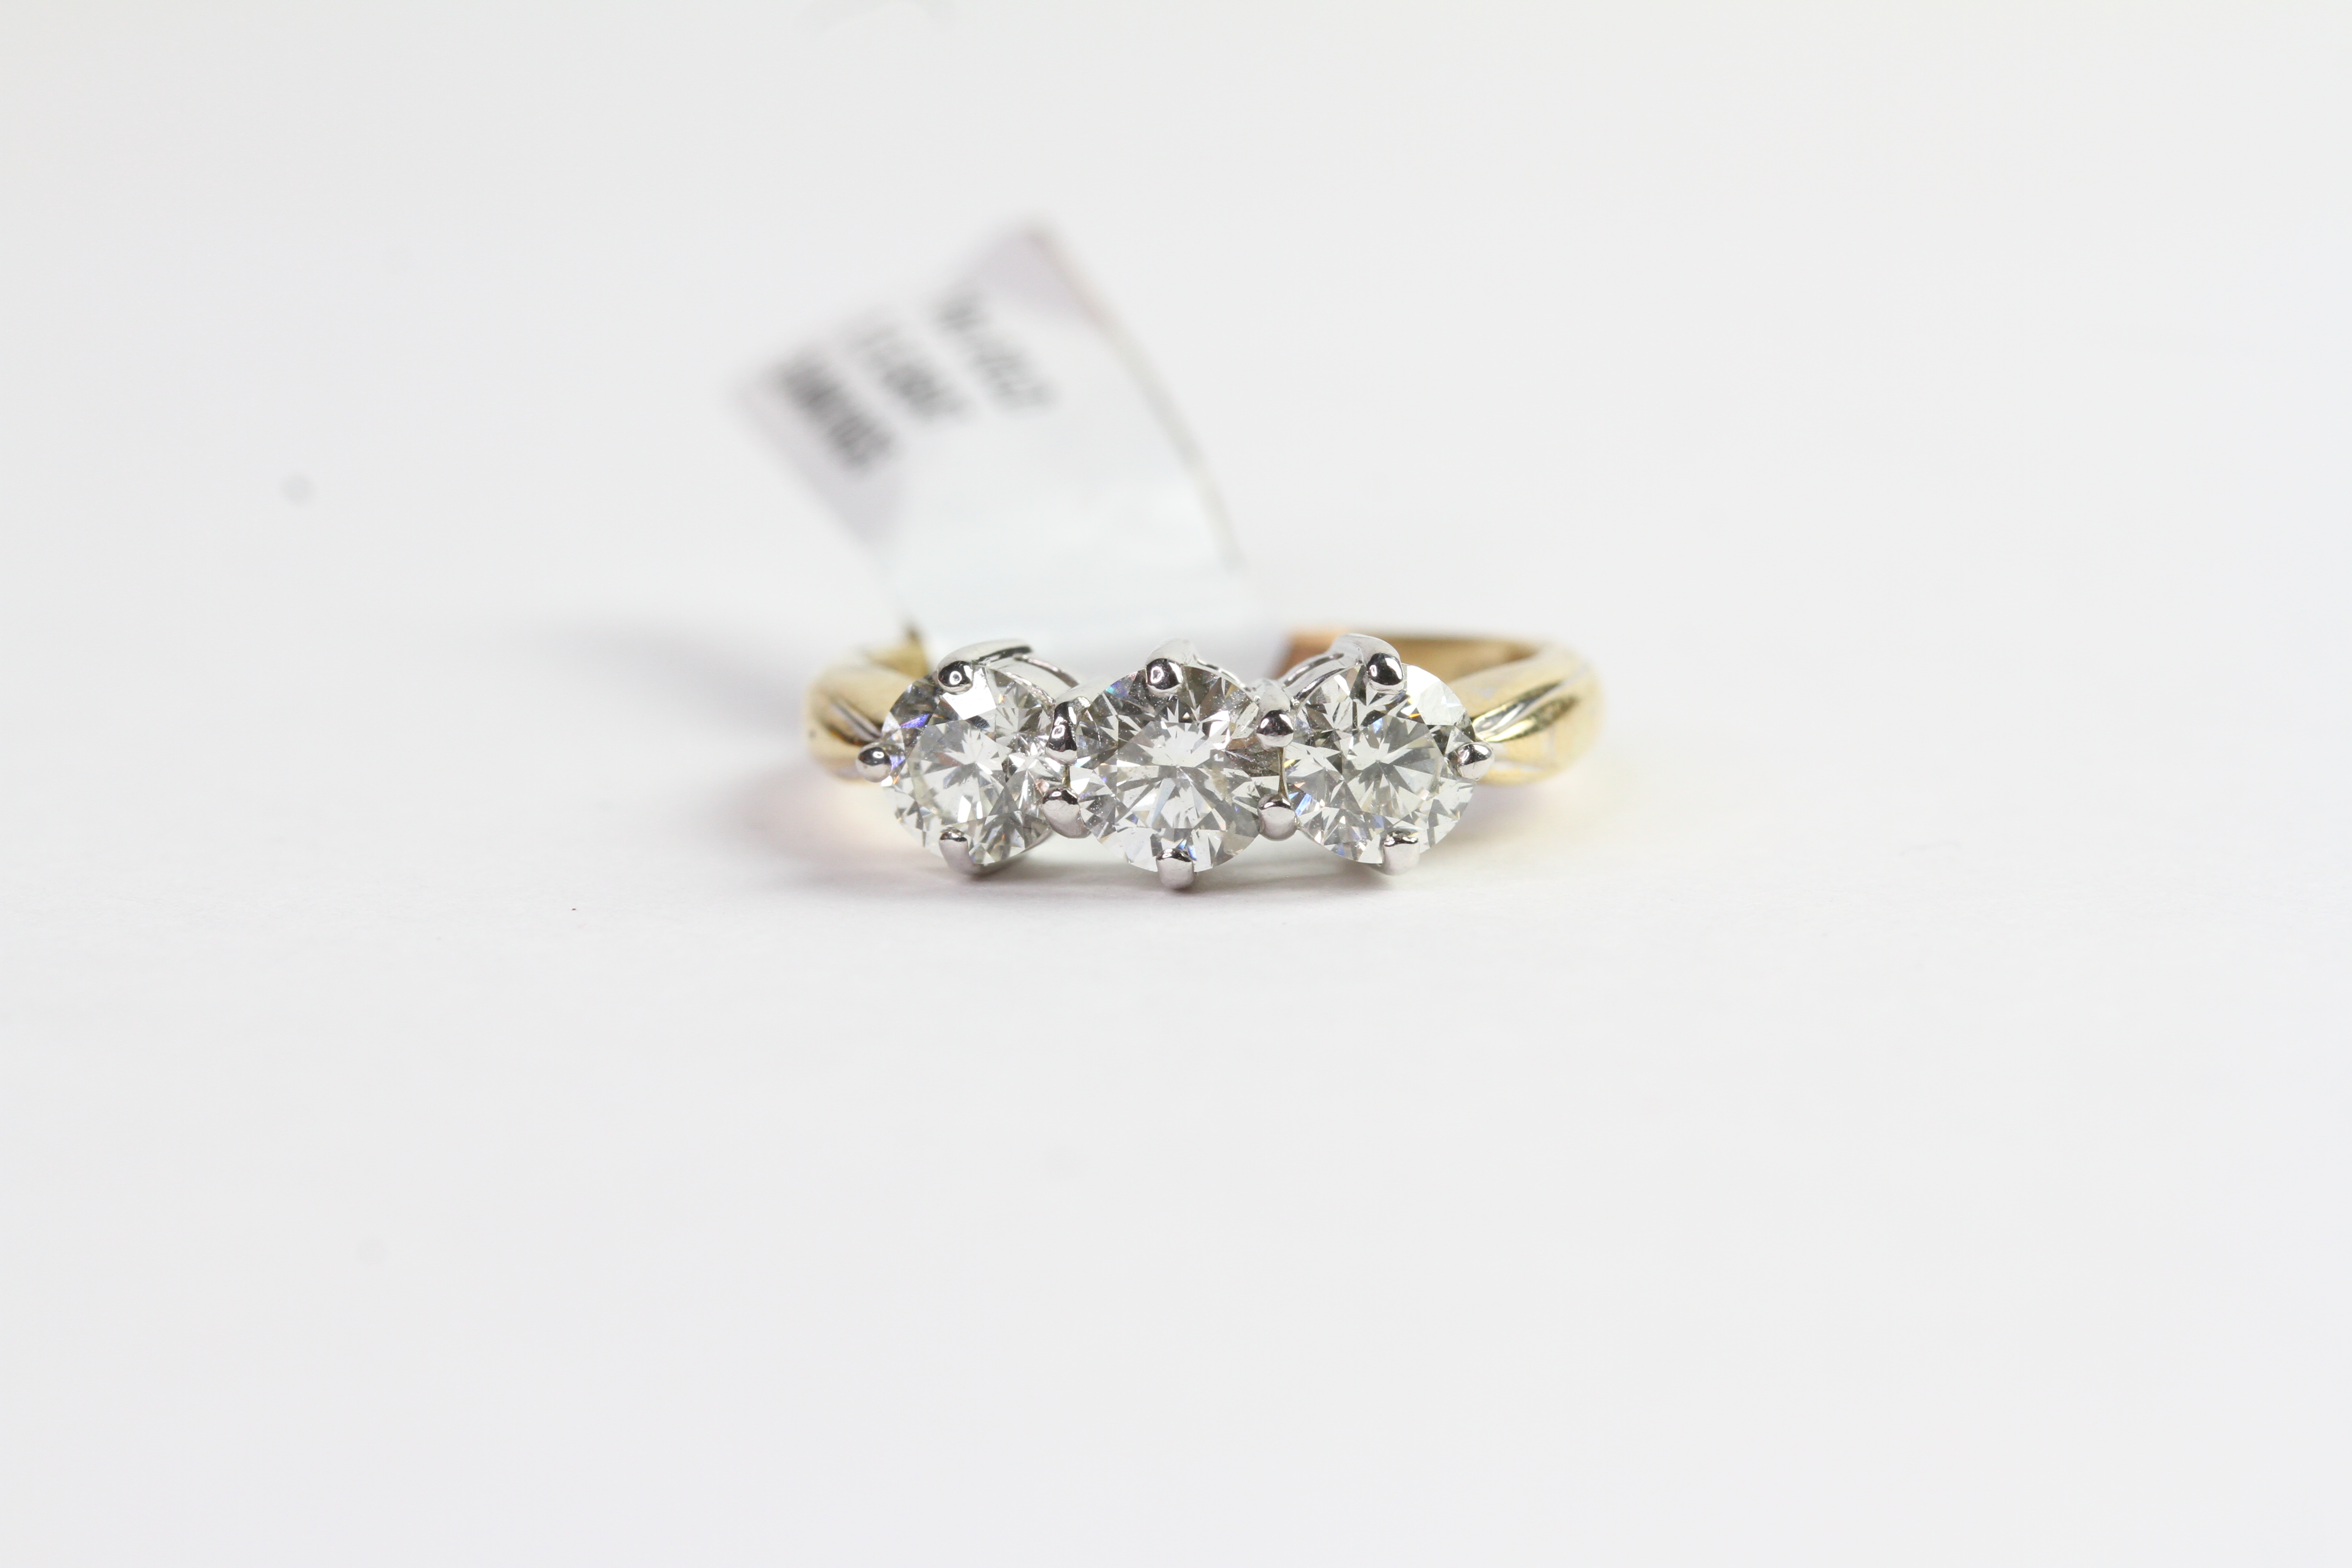 1.33ct Three Stone Diamond Ring, three brilliant cut diamonds estimated 0.42/0.49/0.42ct, tested - Image 2 of 2